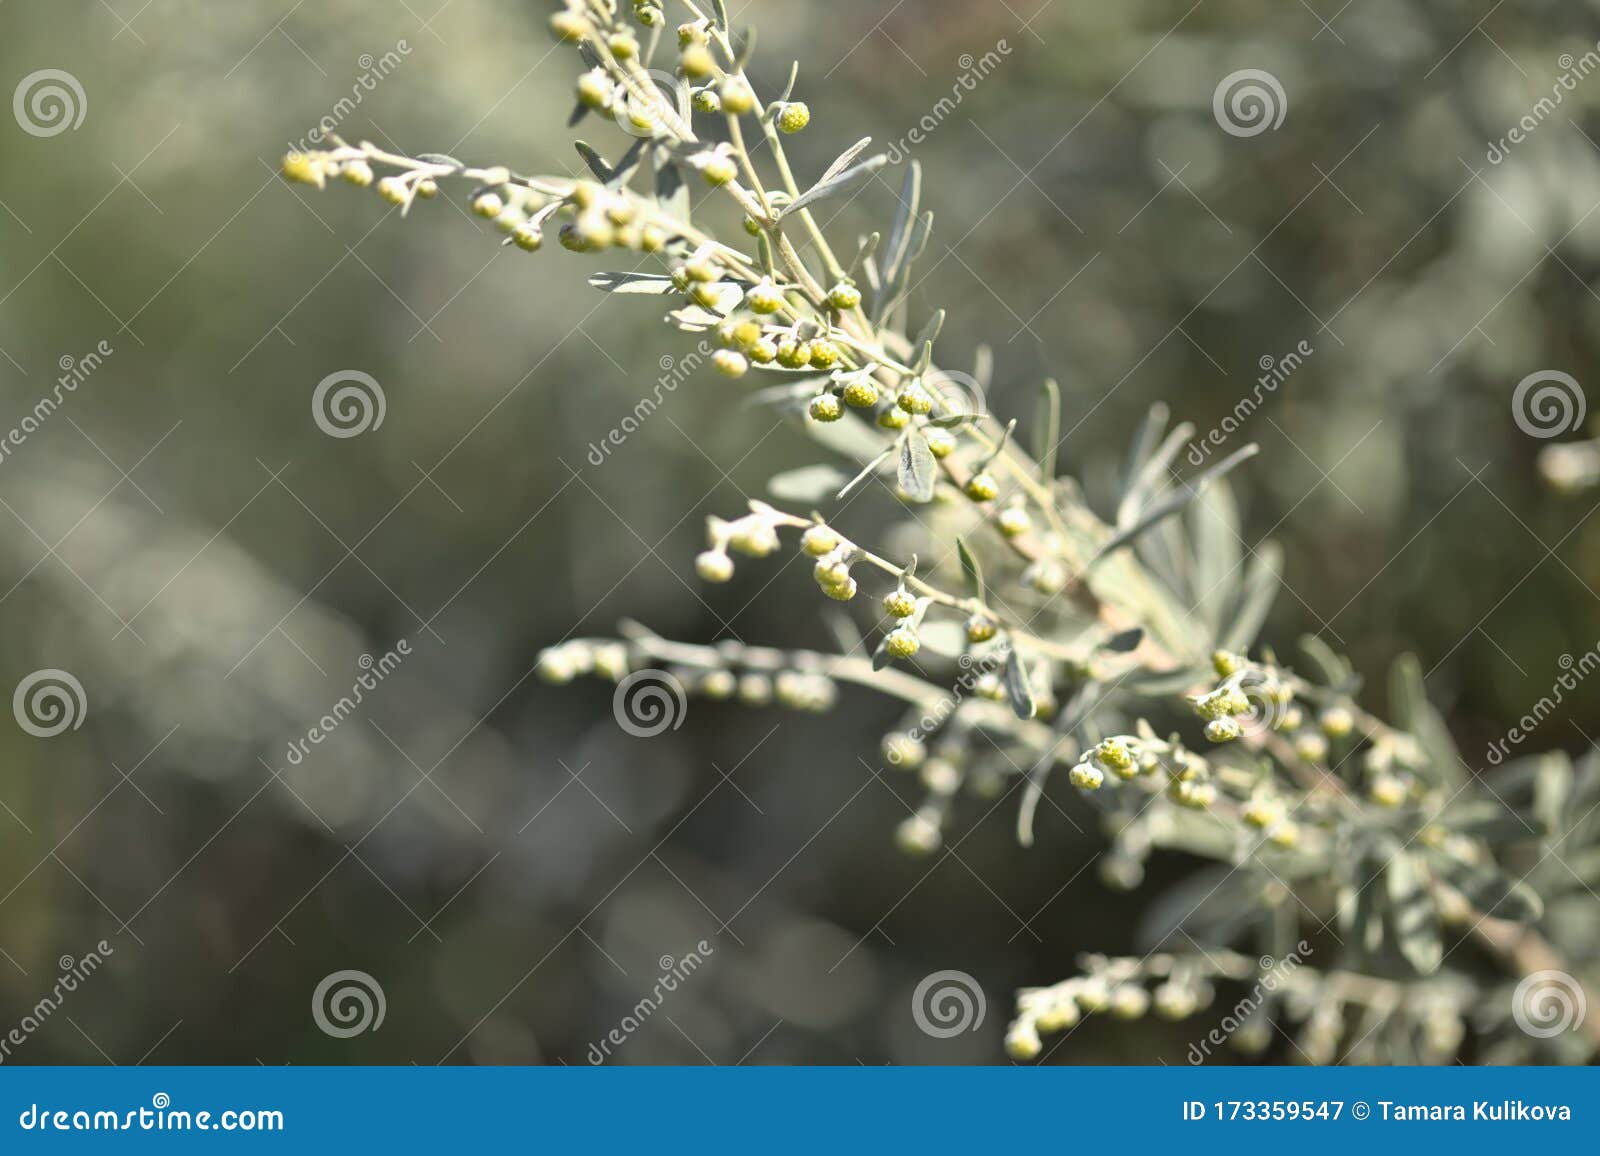 flora of gran canaria - artemisia thuscula, canarian wormwood